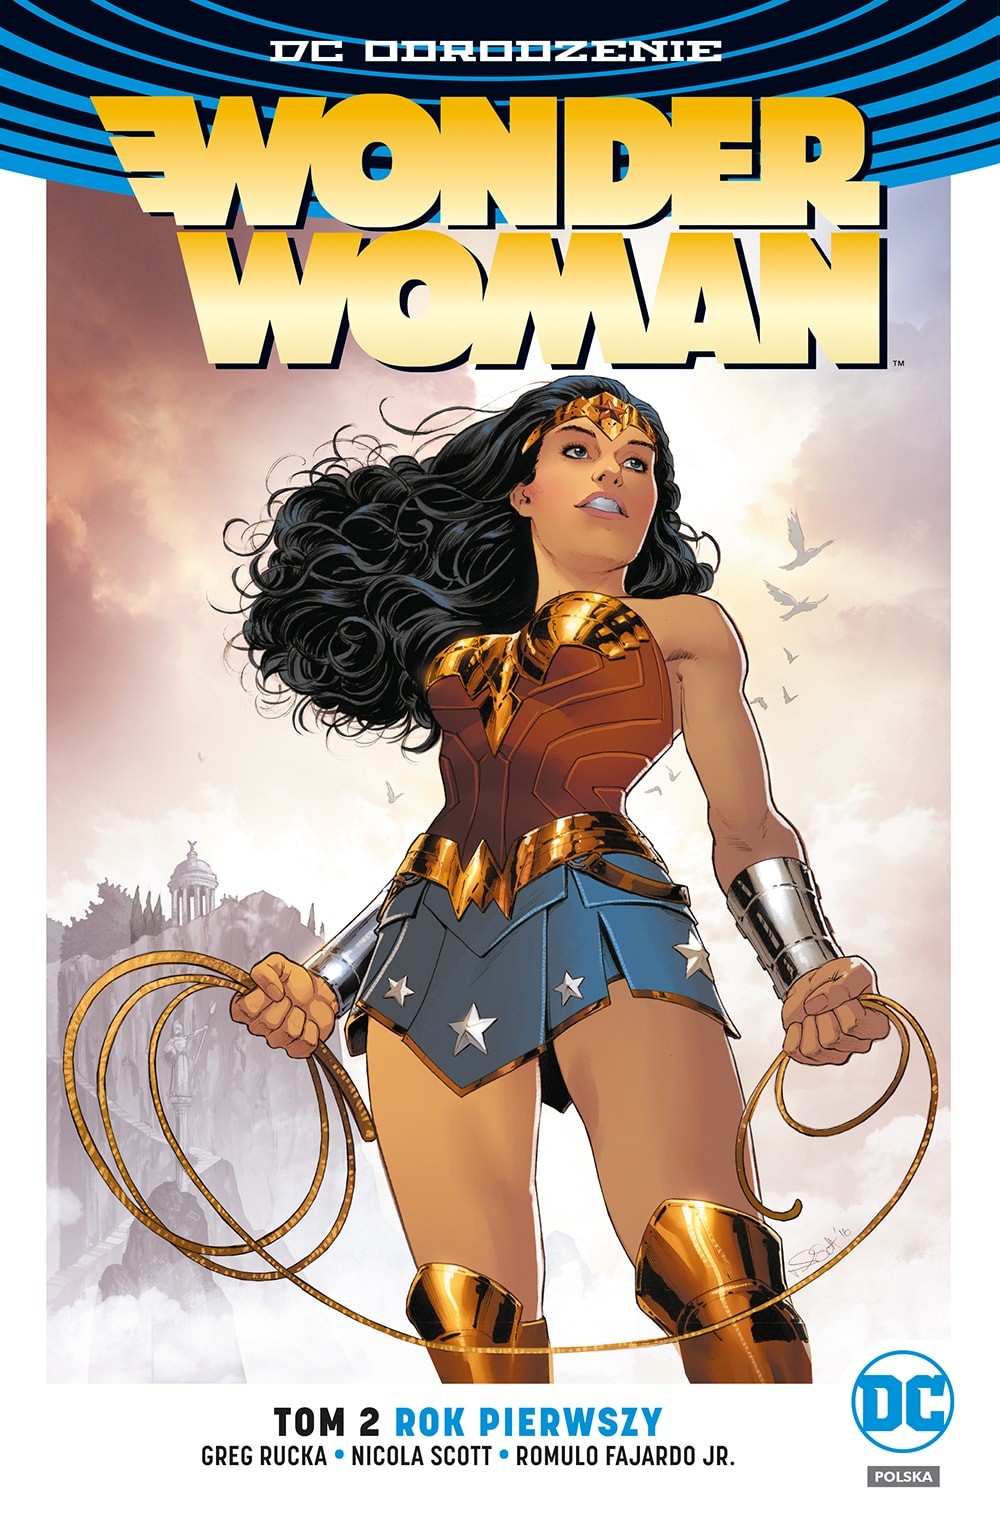 cover_rebirth Wonder Woman_tom 02 300 dpi-min.jpg